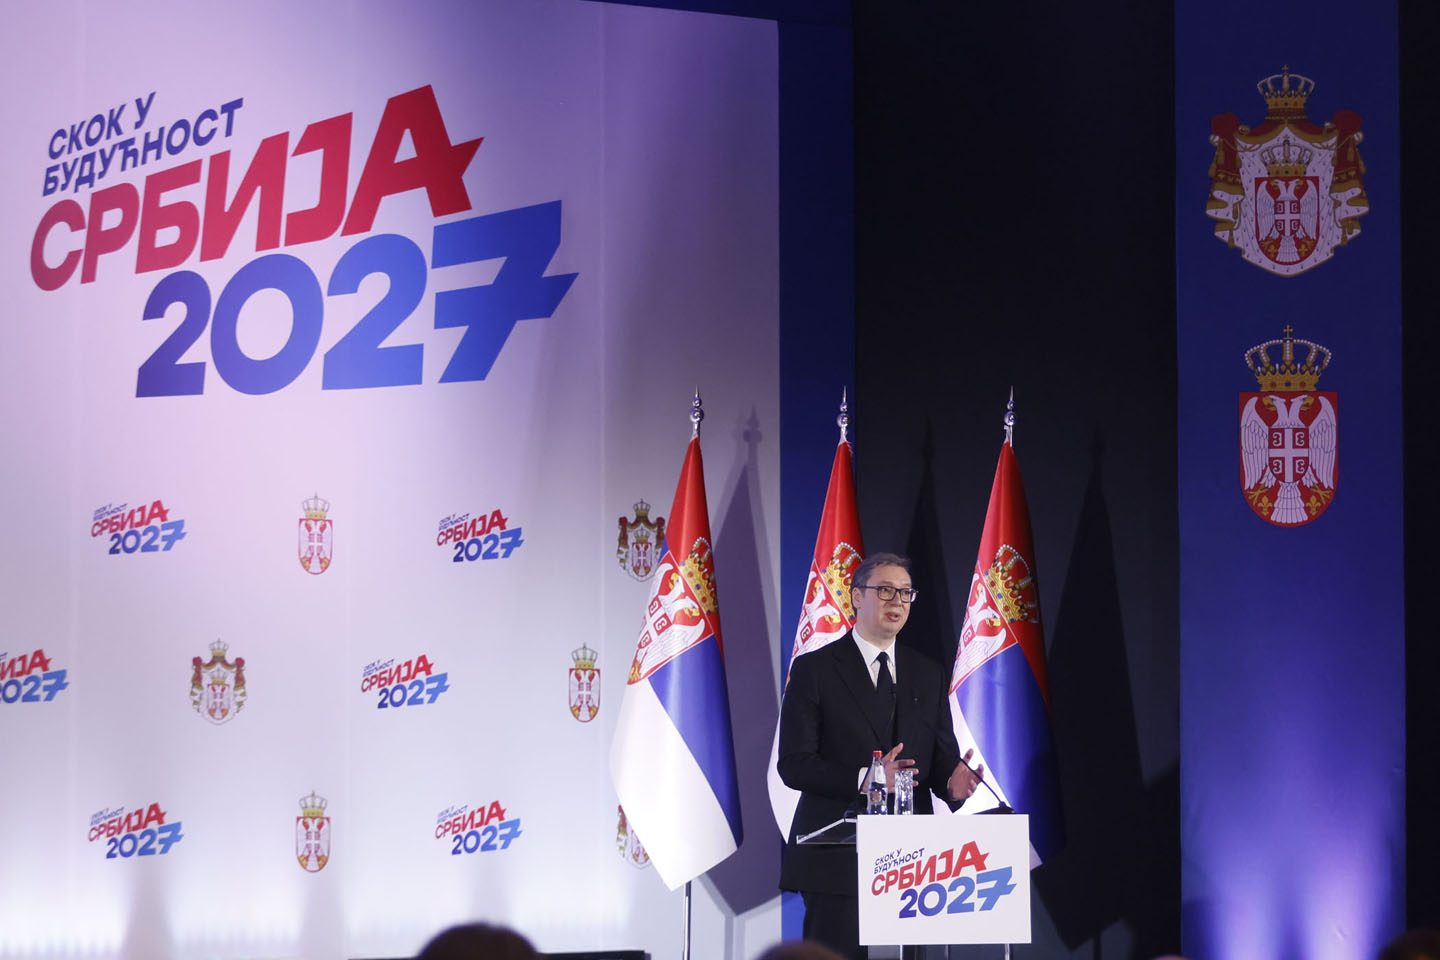 „Skok u budućnost – Srbija EKSPO 2027“ koštaće 17,8 milijardi evra rekao Aleksandar Vučić.